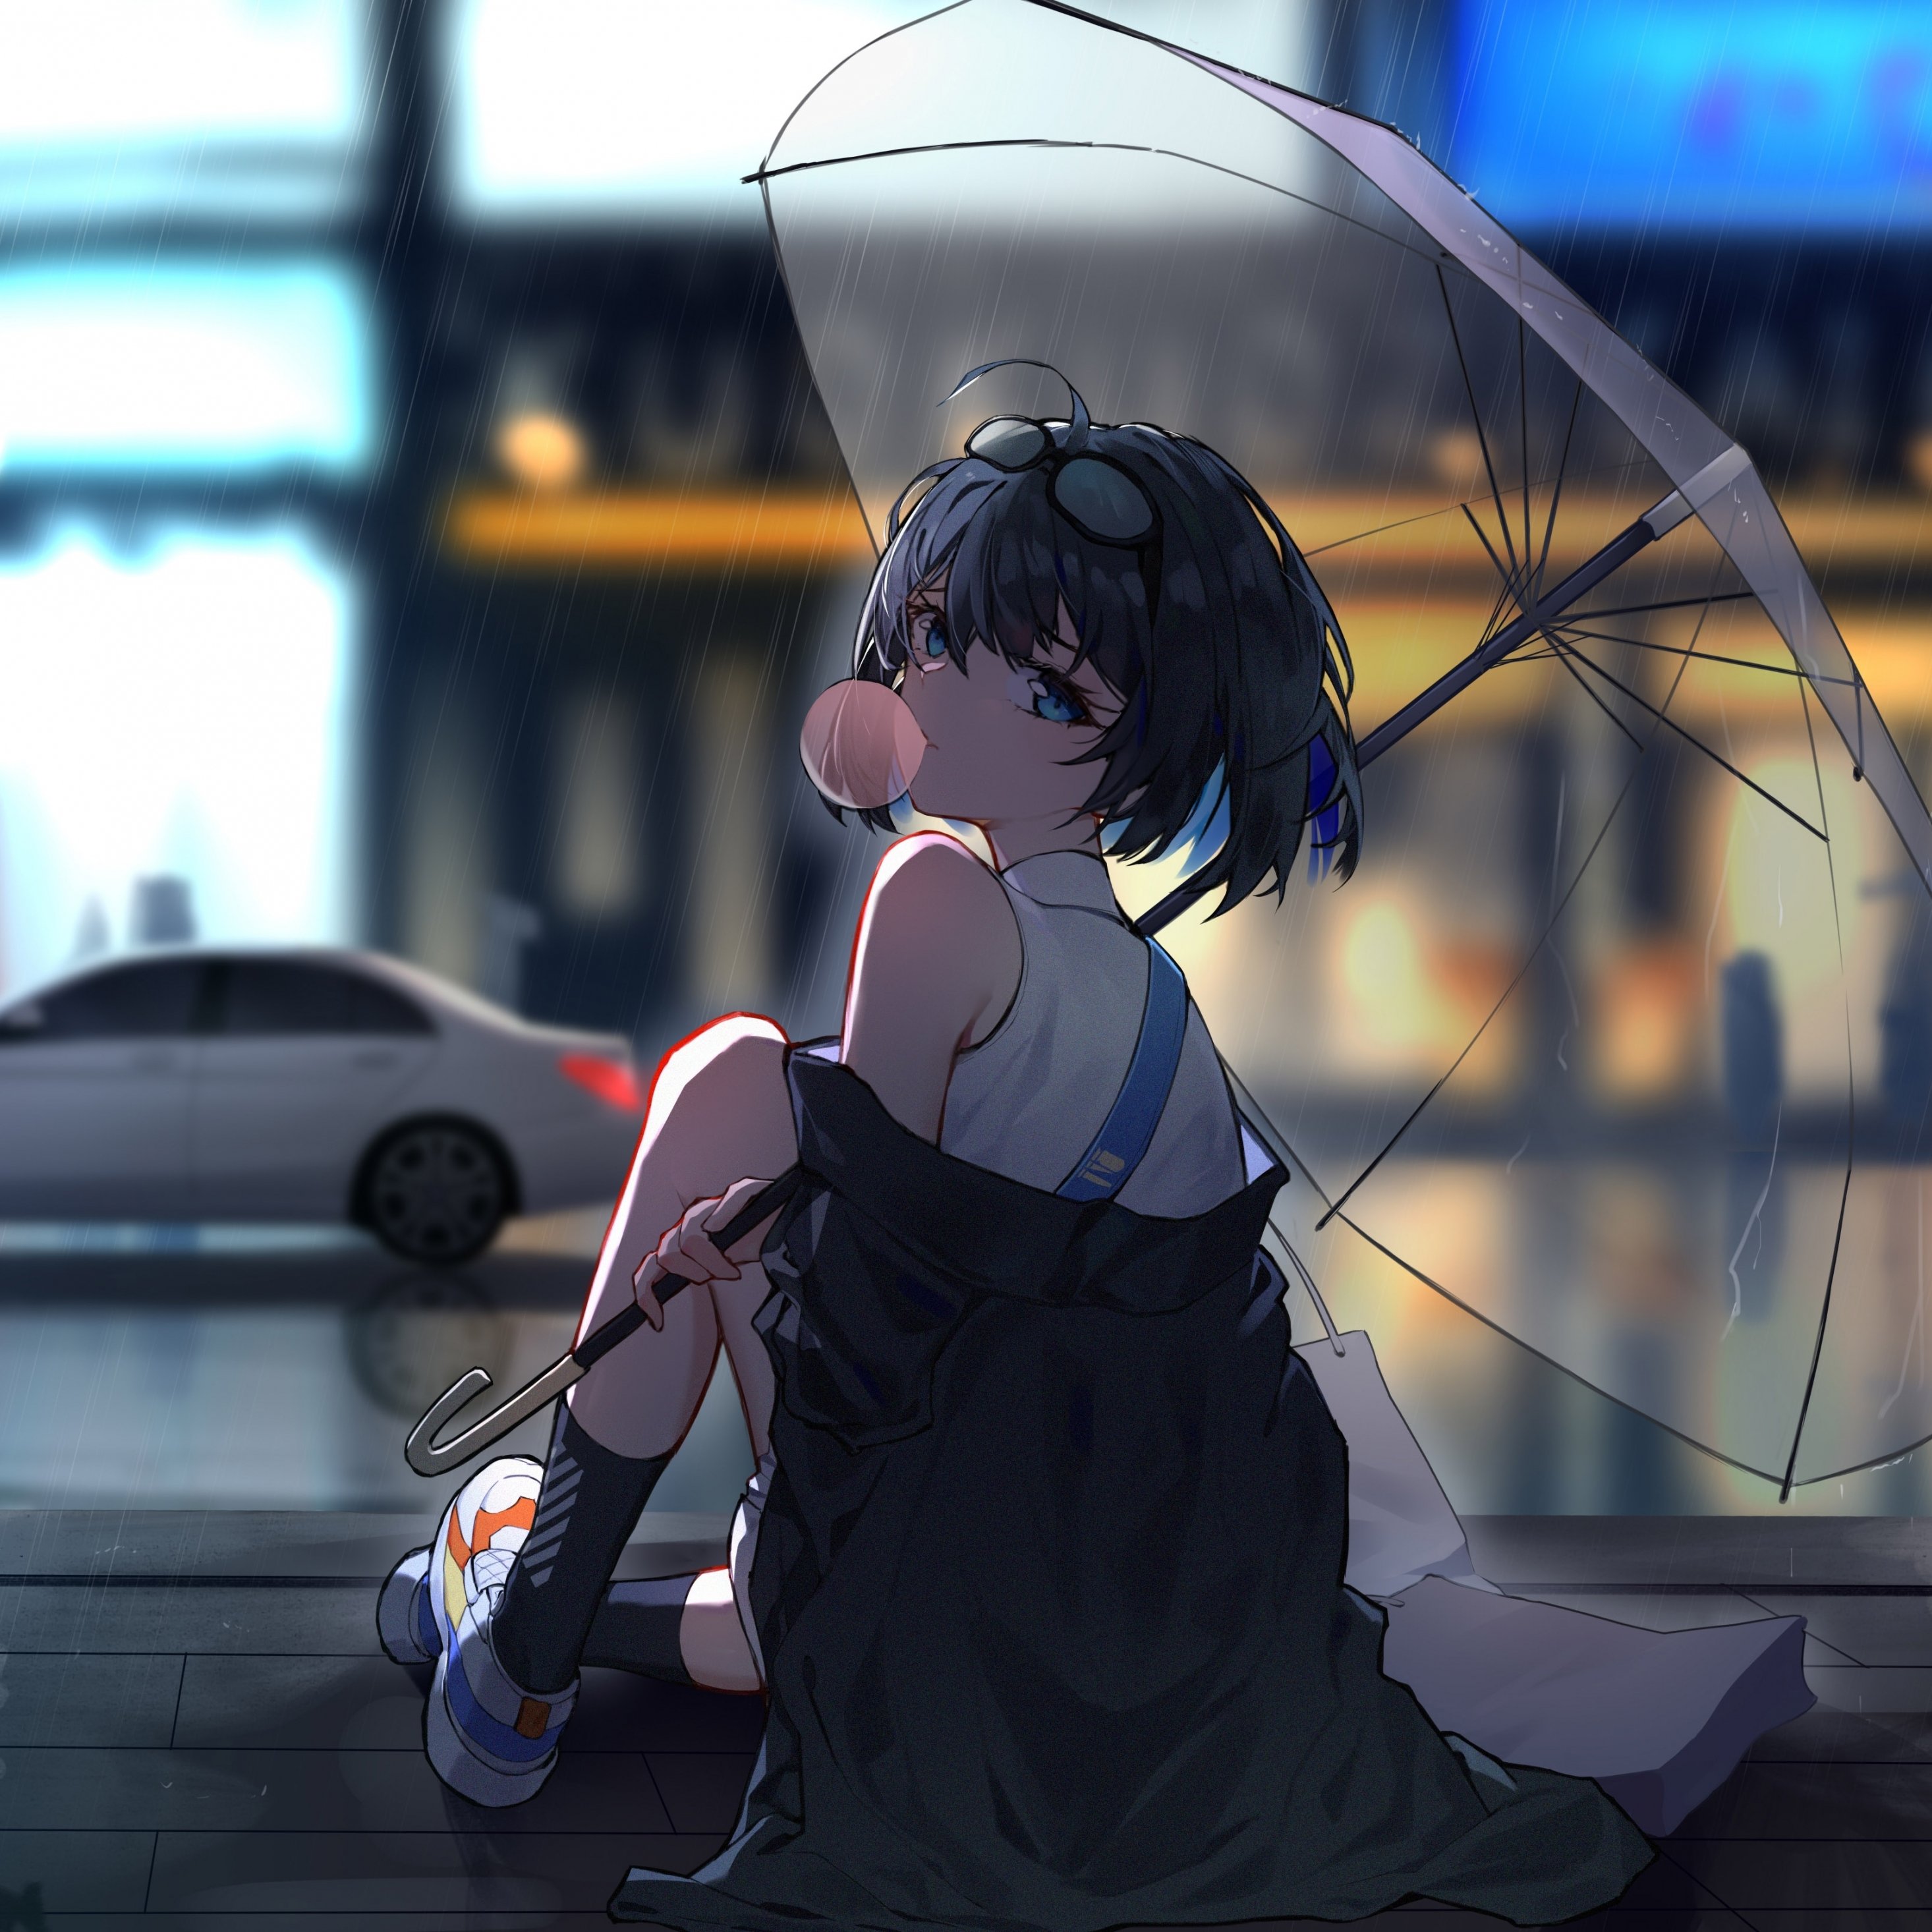 Download enjoying rain, anime girl 2932x2932 wallpaper, ipad pro retina, 2932x2932 image, background, 25093